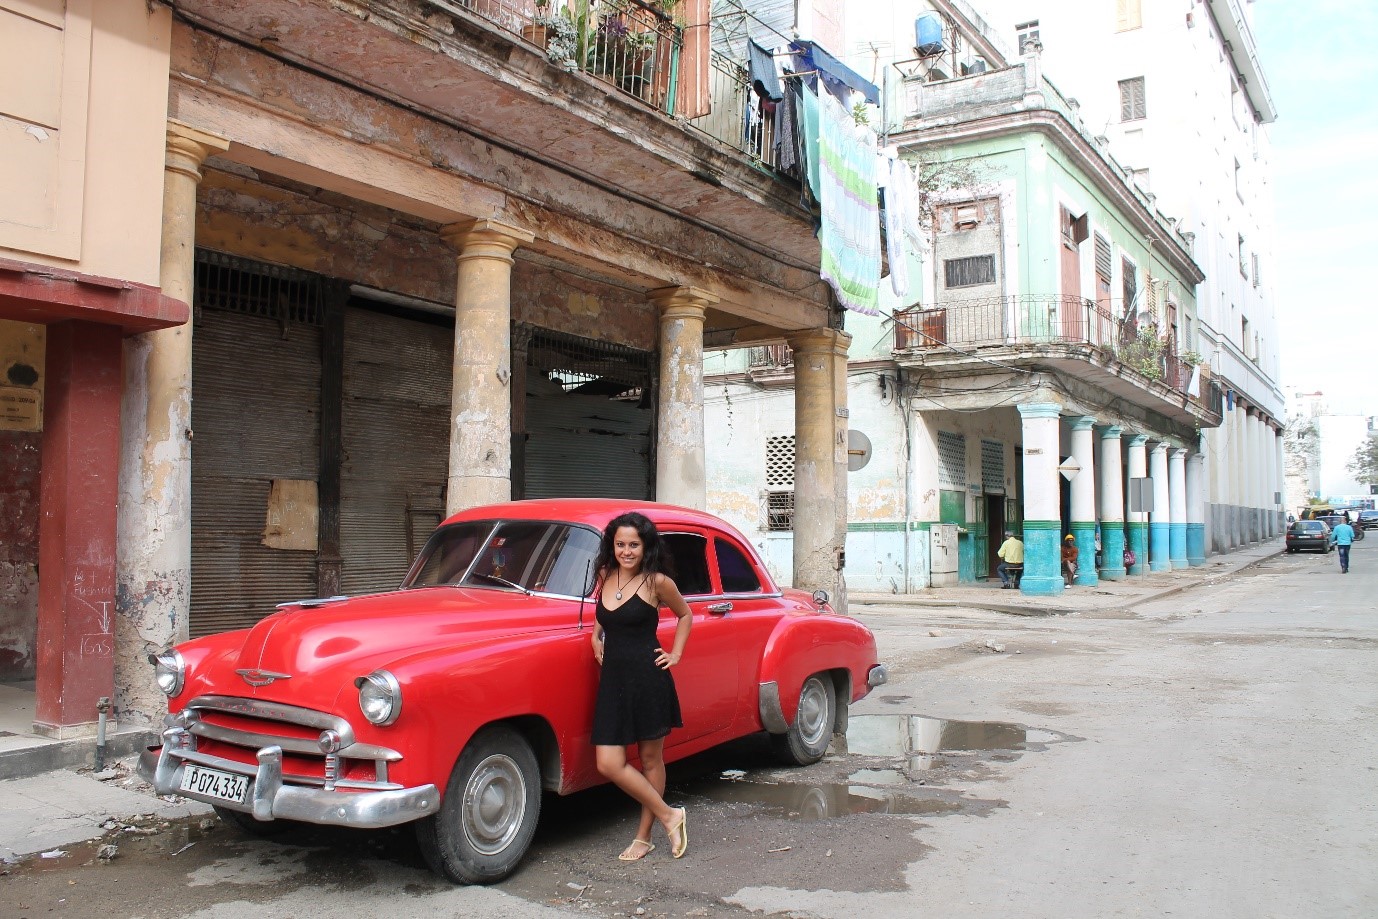 11 BEST THINGS TO DO IN CUBA